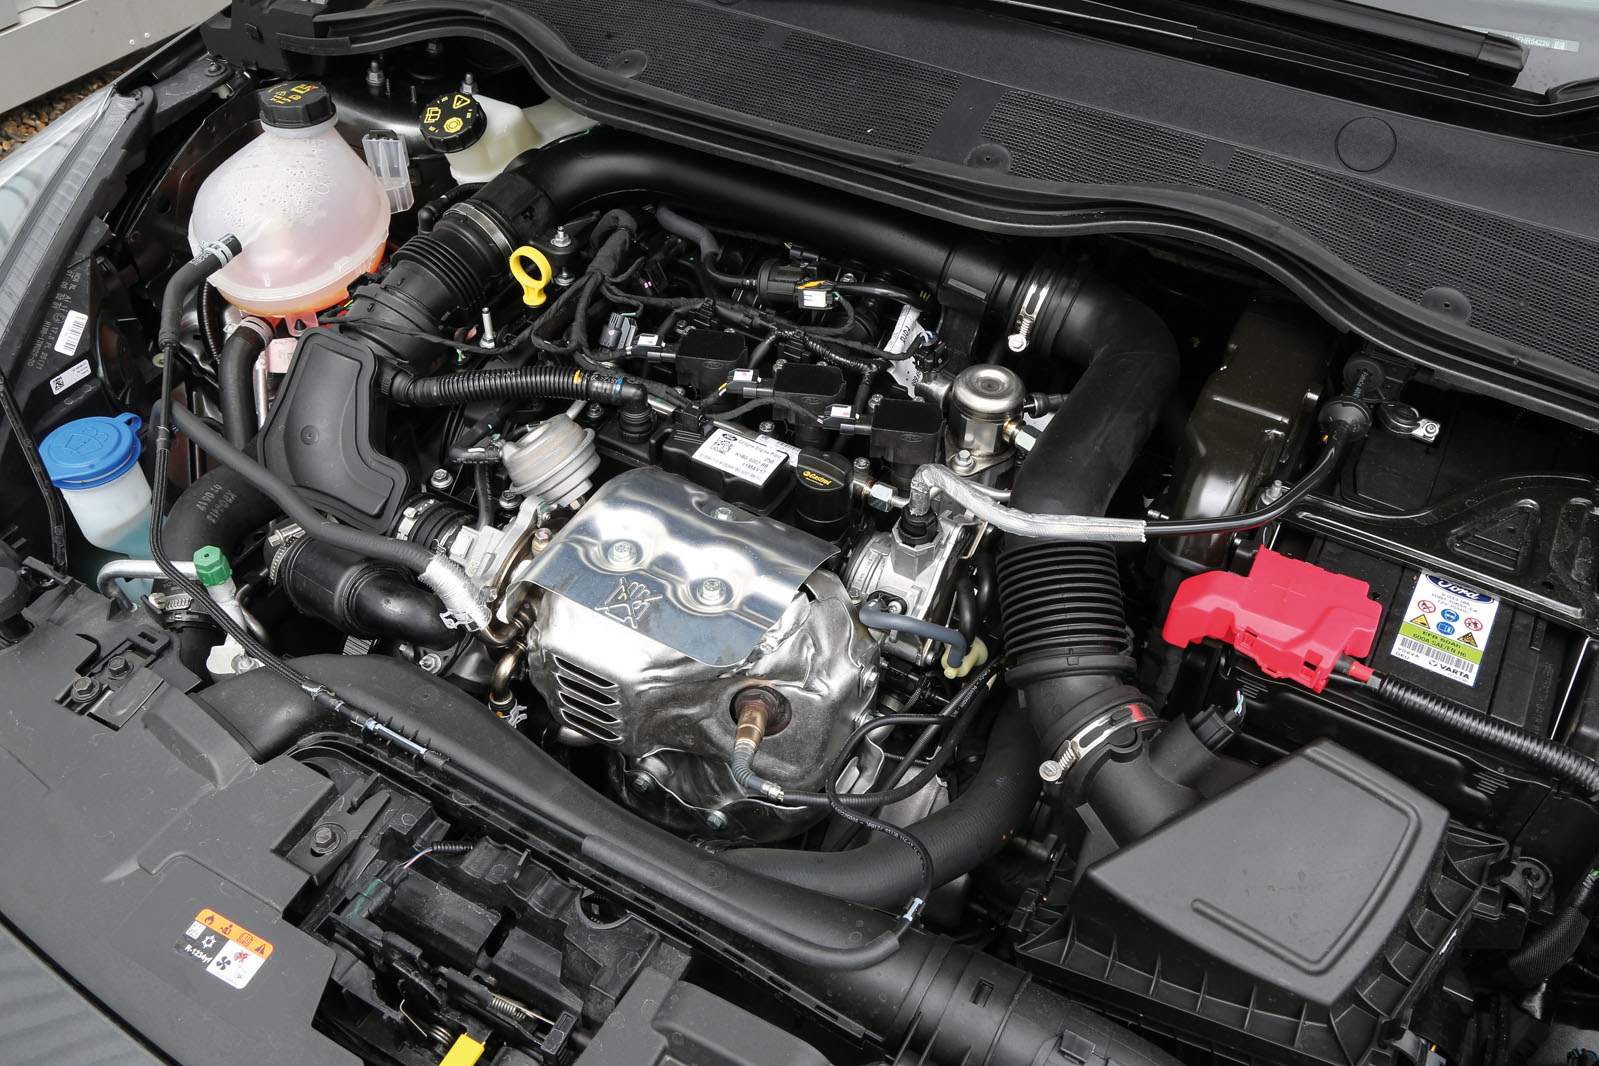 1.0-litre EcoBoost Ford Fiesta engine